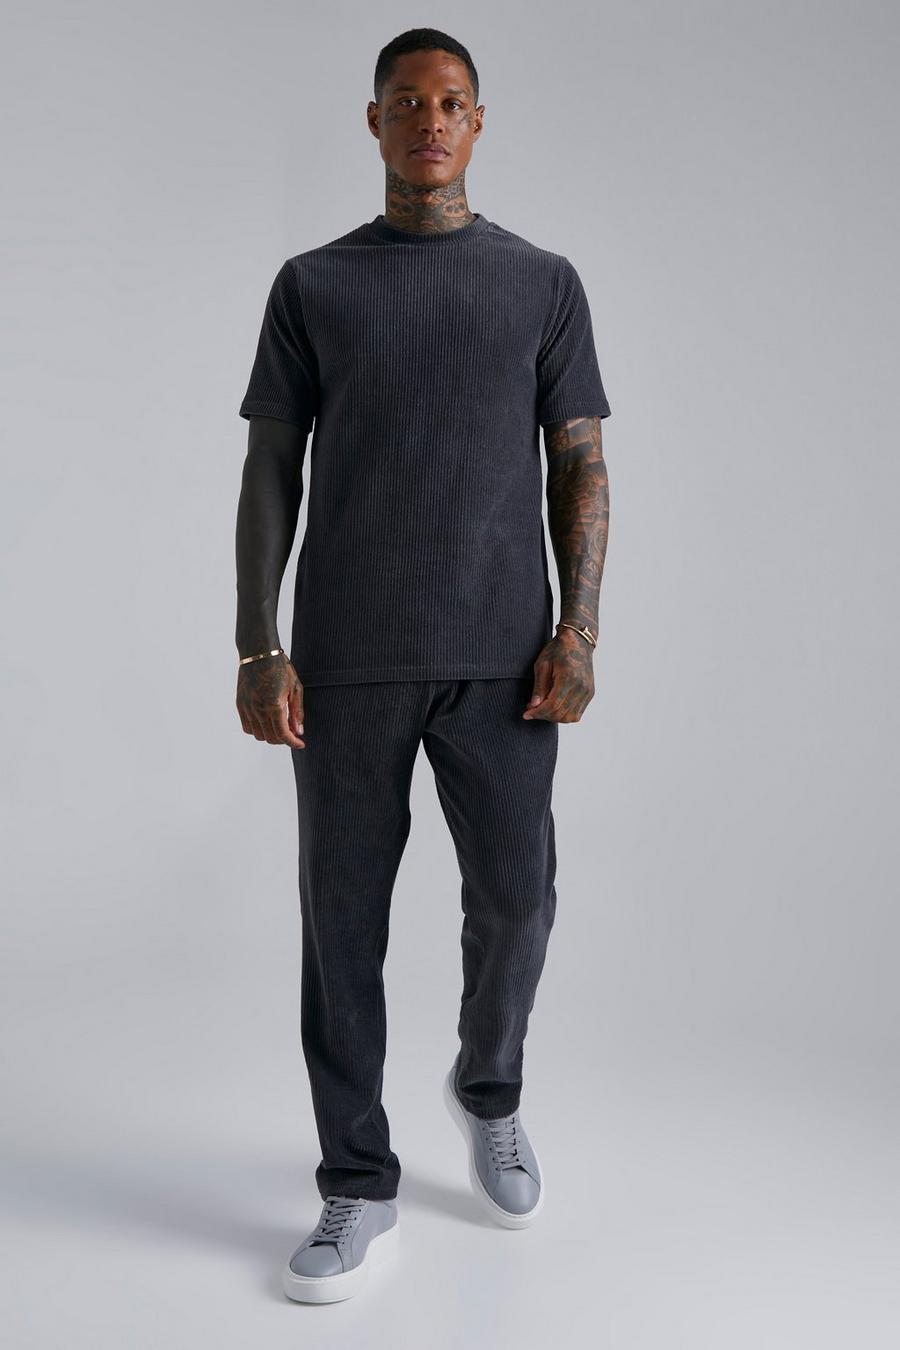 Charcoal grå T-shirt och mjukisbyxor i velour